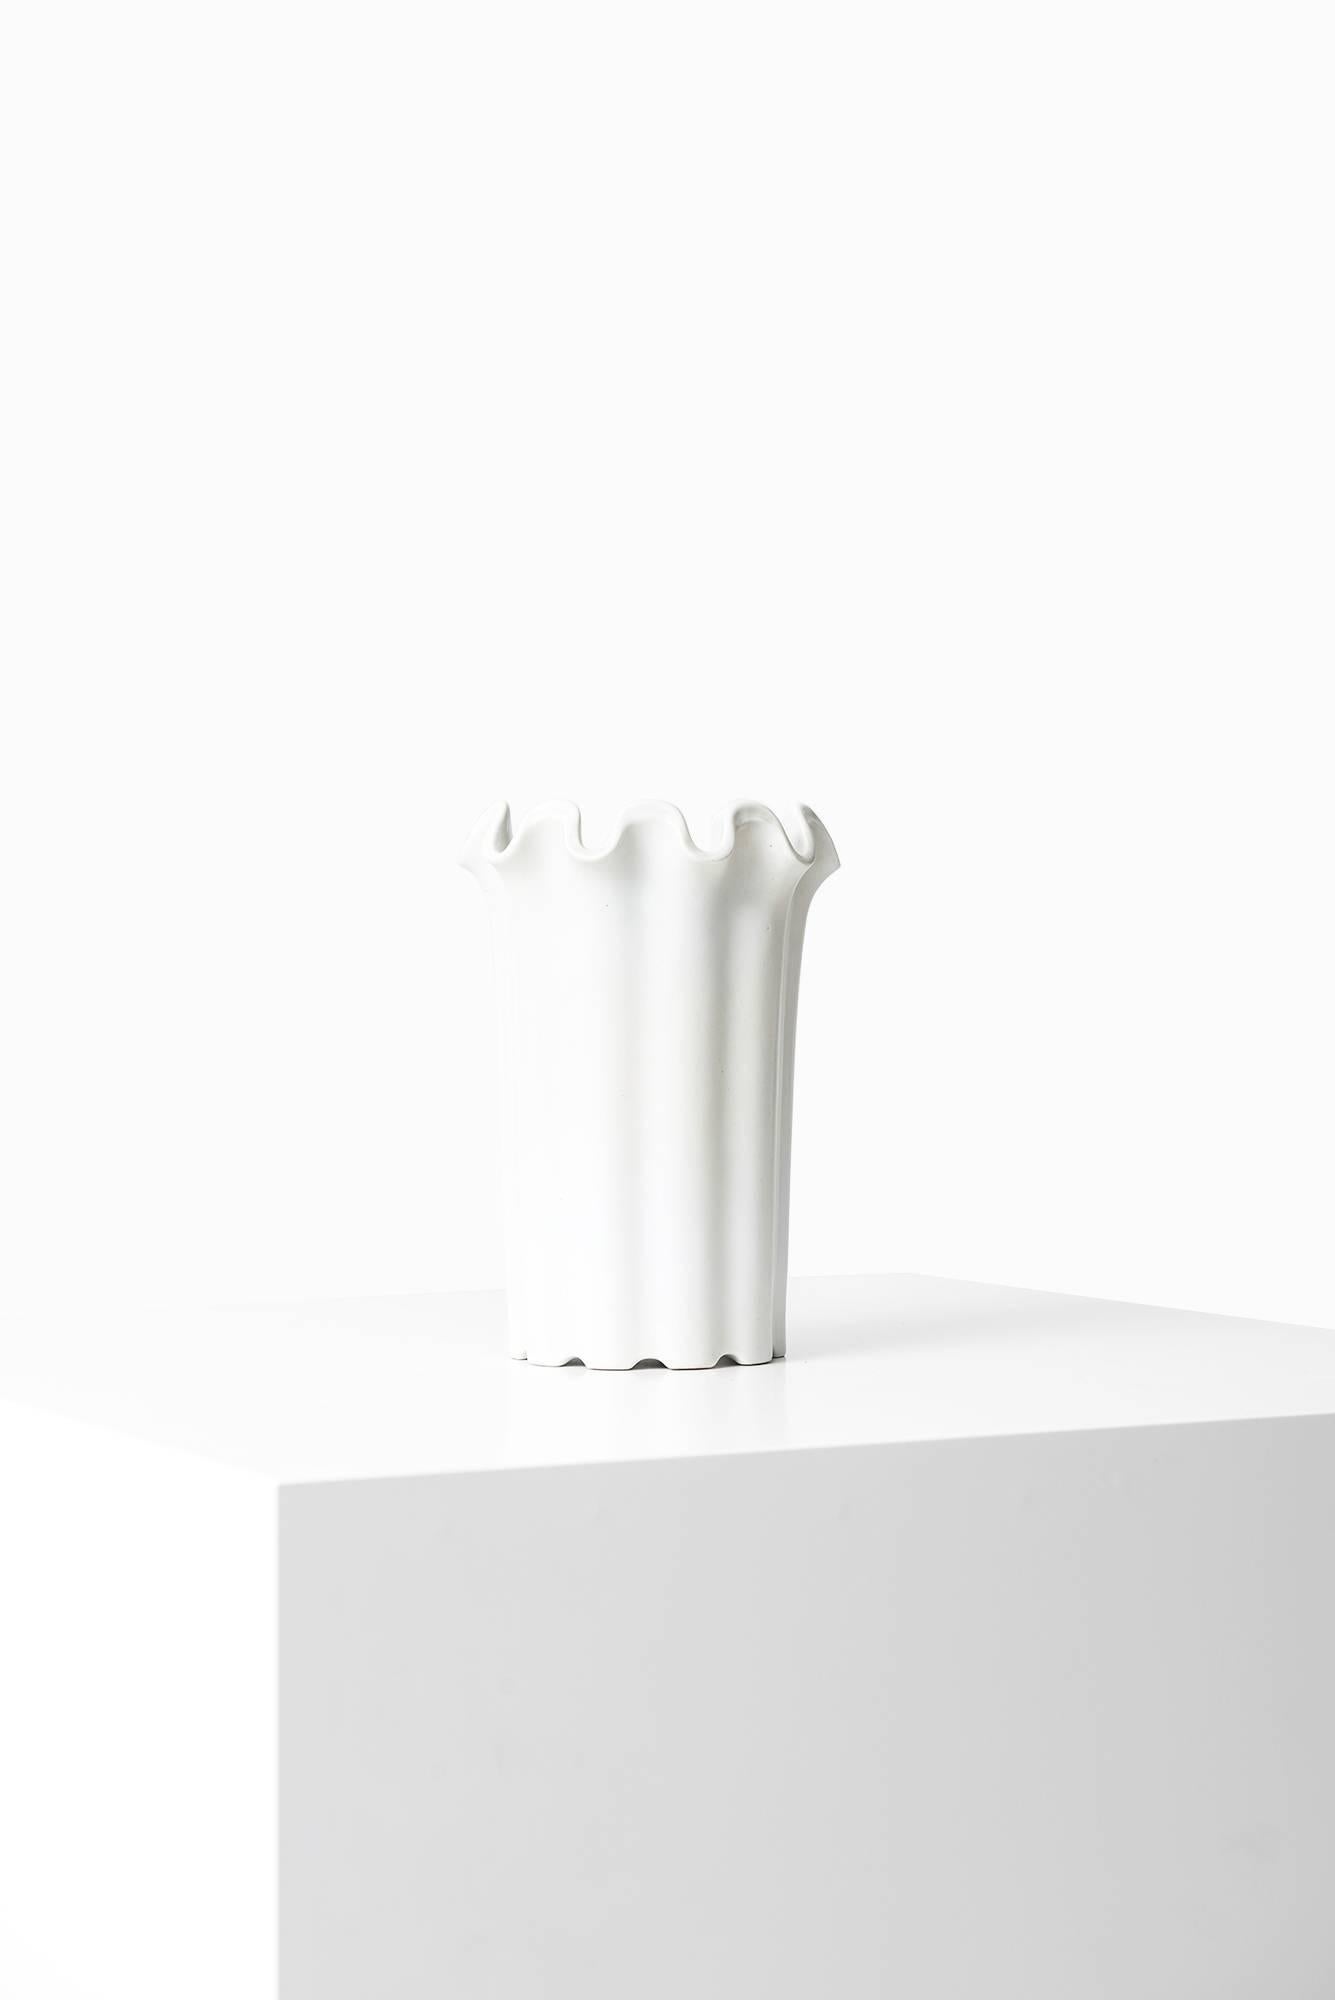 Ceramic vase model Våga designed by Wilhelm Kage. Produced by Gustavsberg in Sweden.